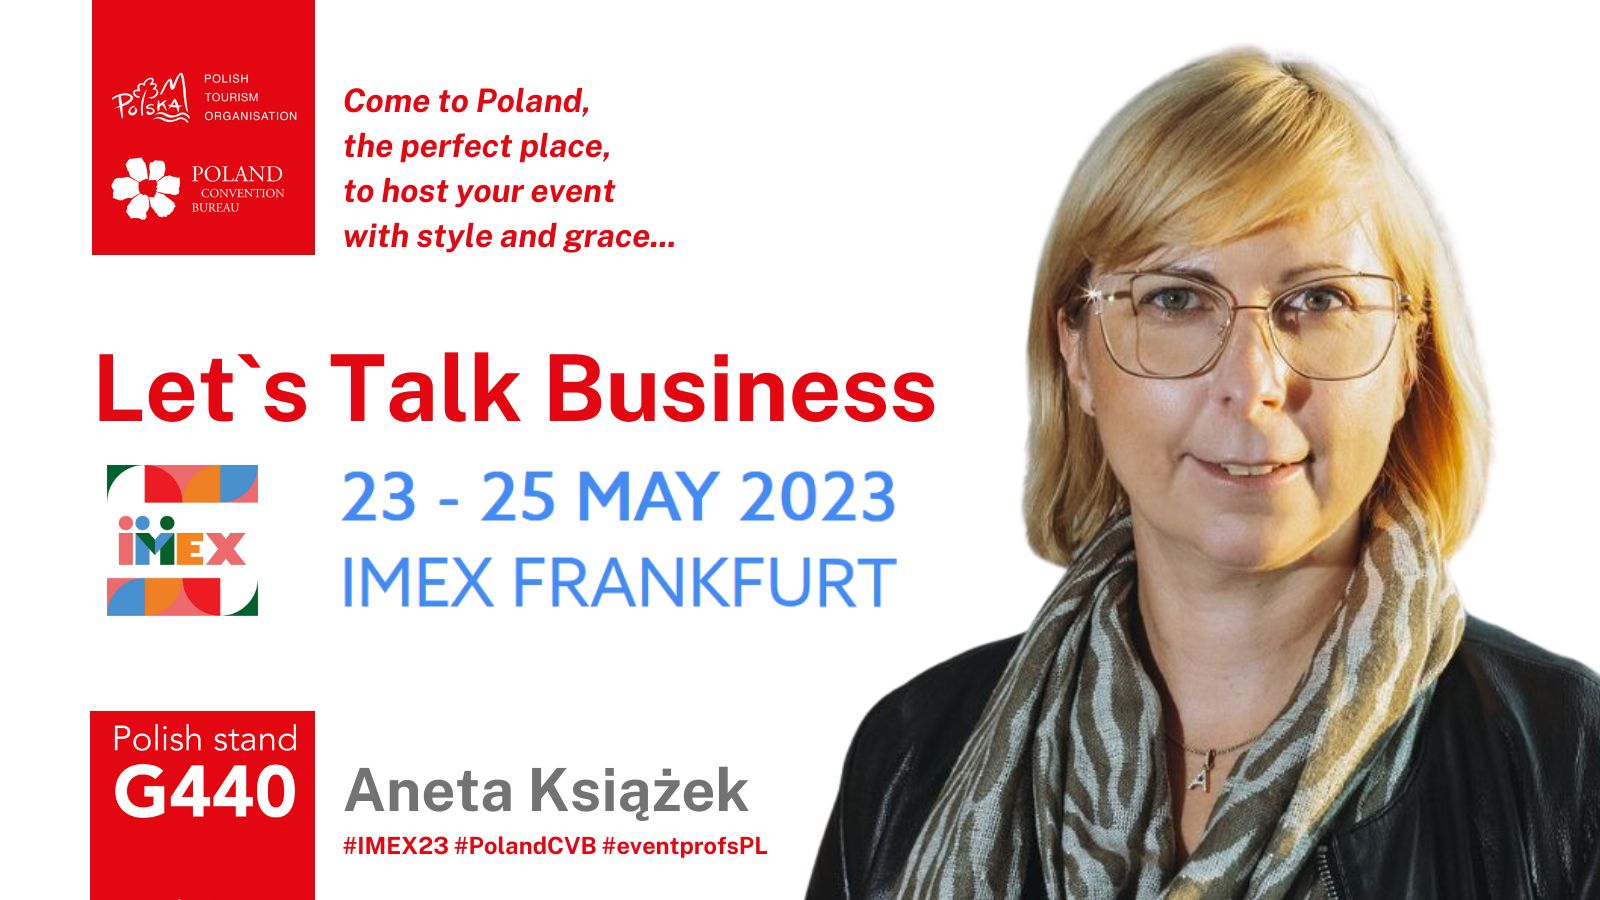 002-aneta-ksiazek-poland-convention-bureau-frankfurt-lets-talk-business-targi-turystyczne-MICE.jpg